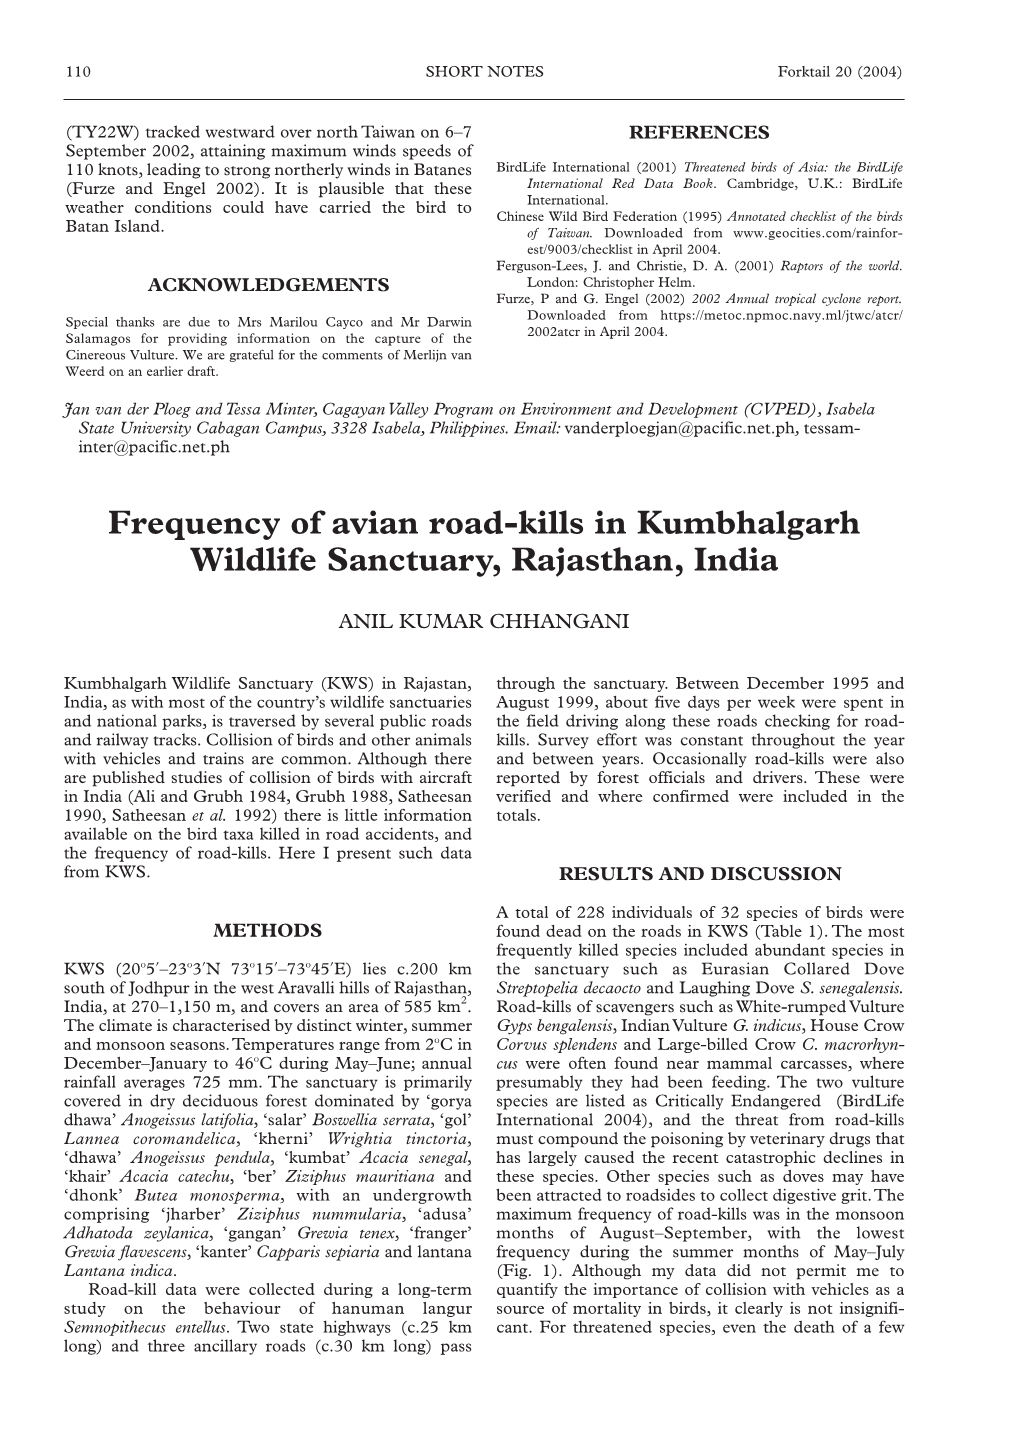 Frequency of Avian Road-Kills in Kumbhalgarh Wildlife Sanctuary, Rajasthan, India